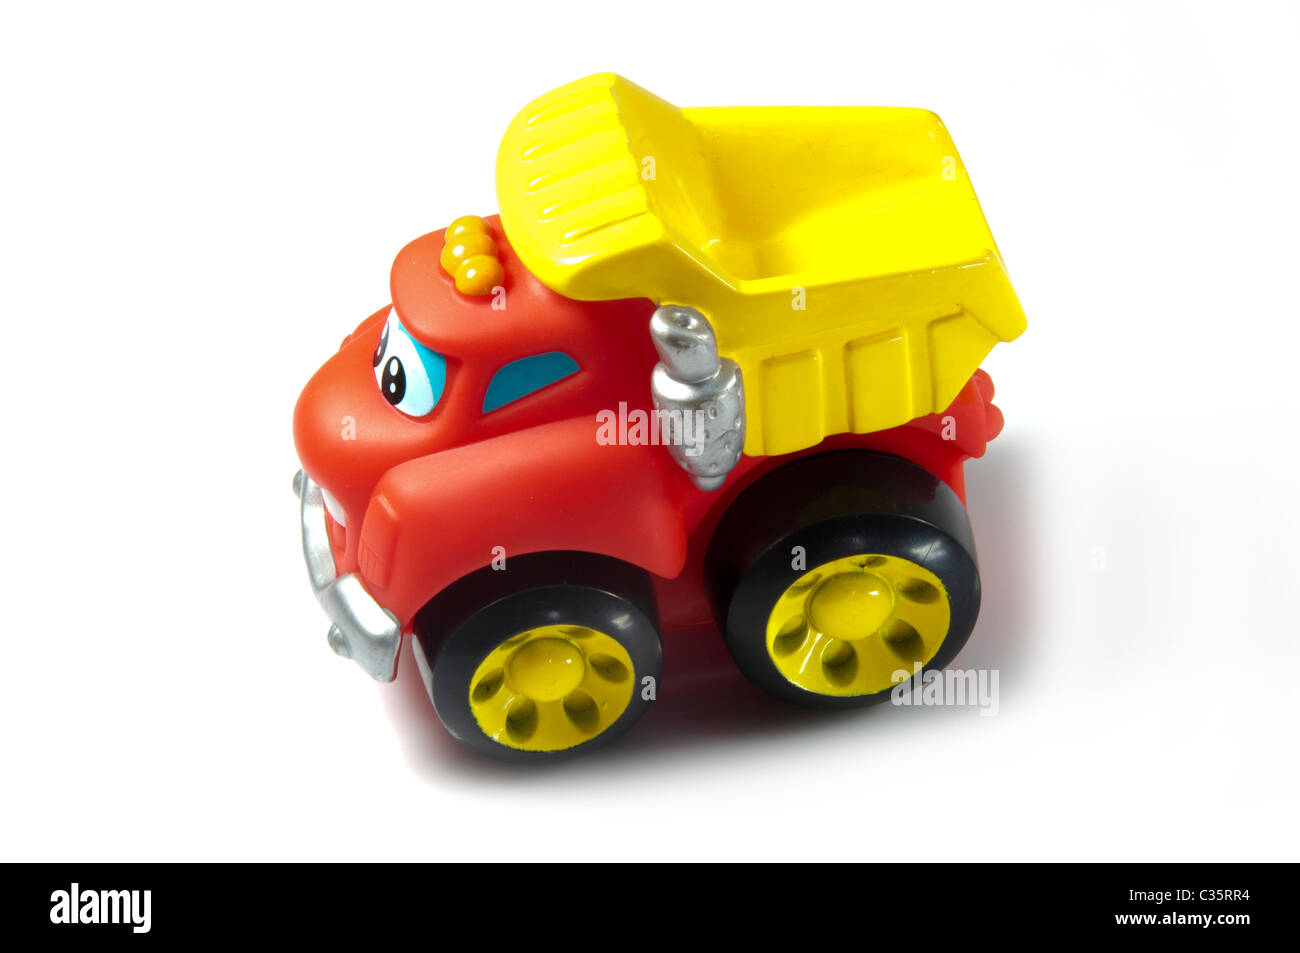 Toy dump truck Stock Photo